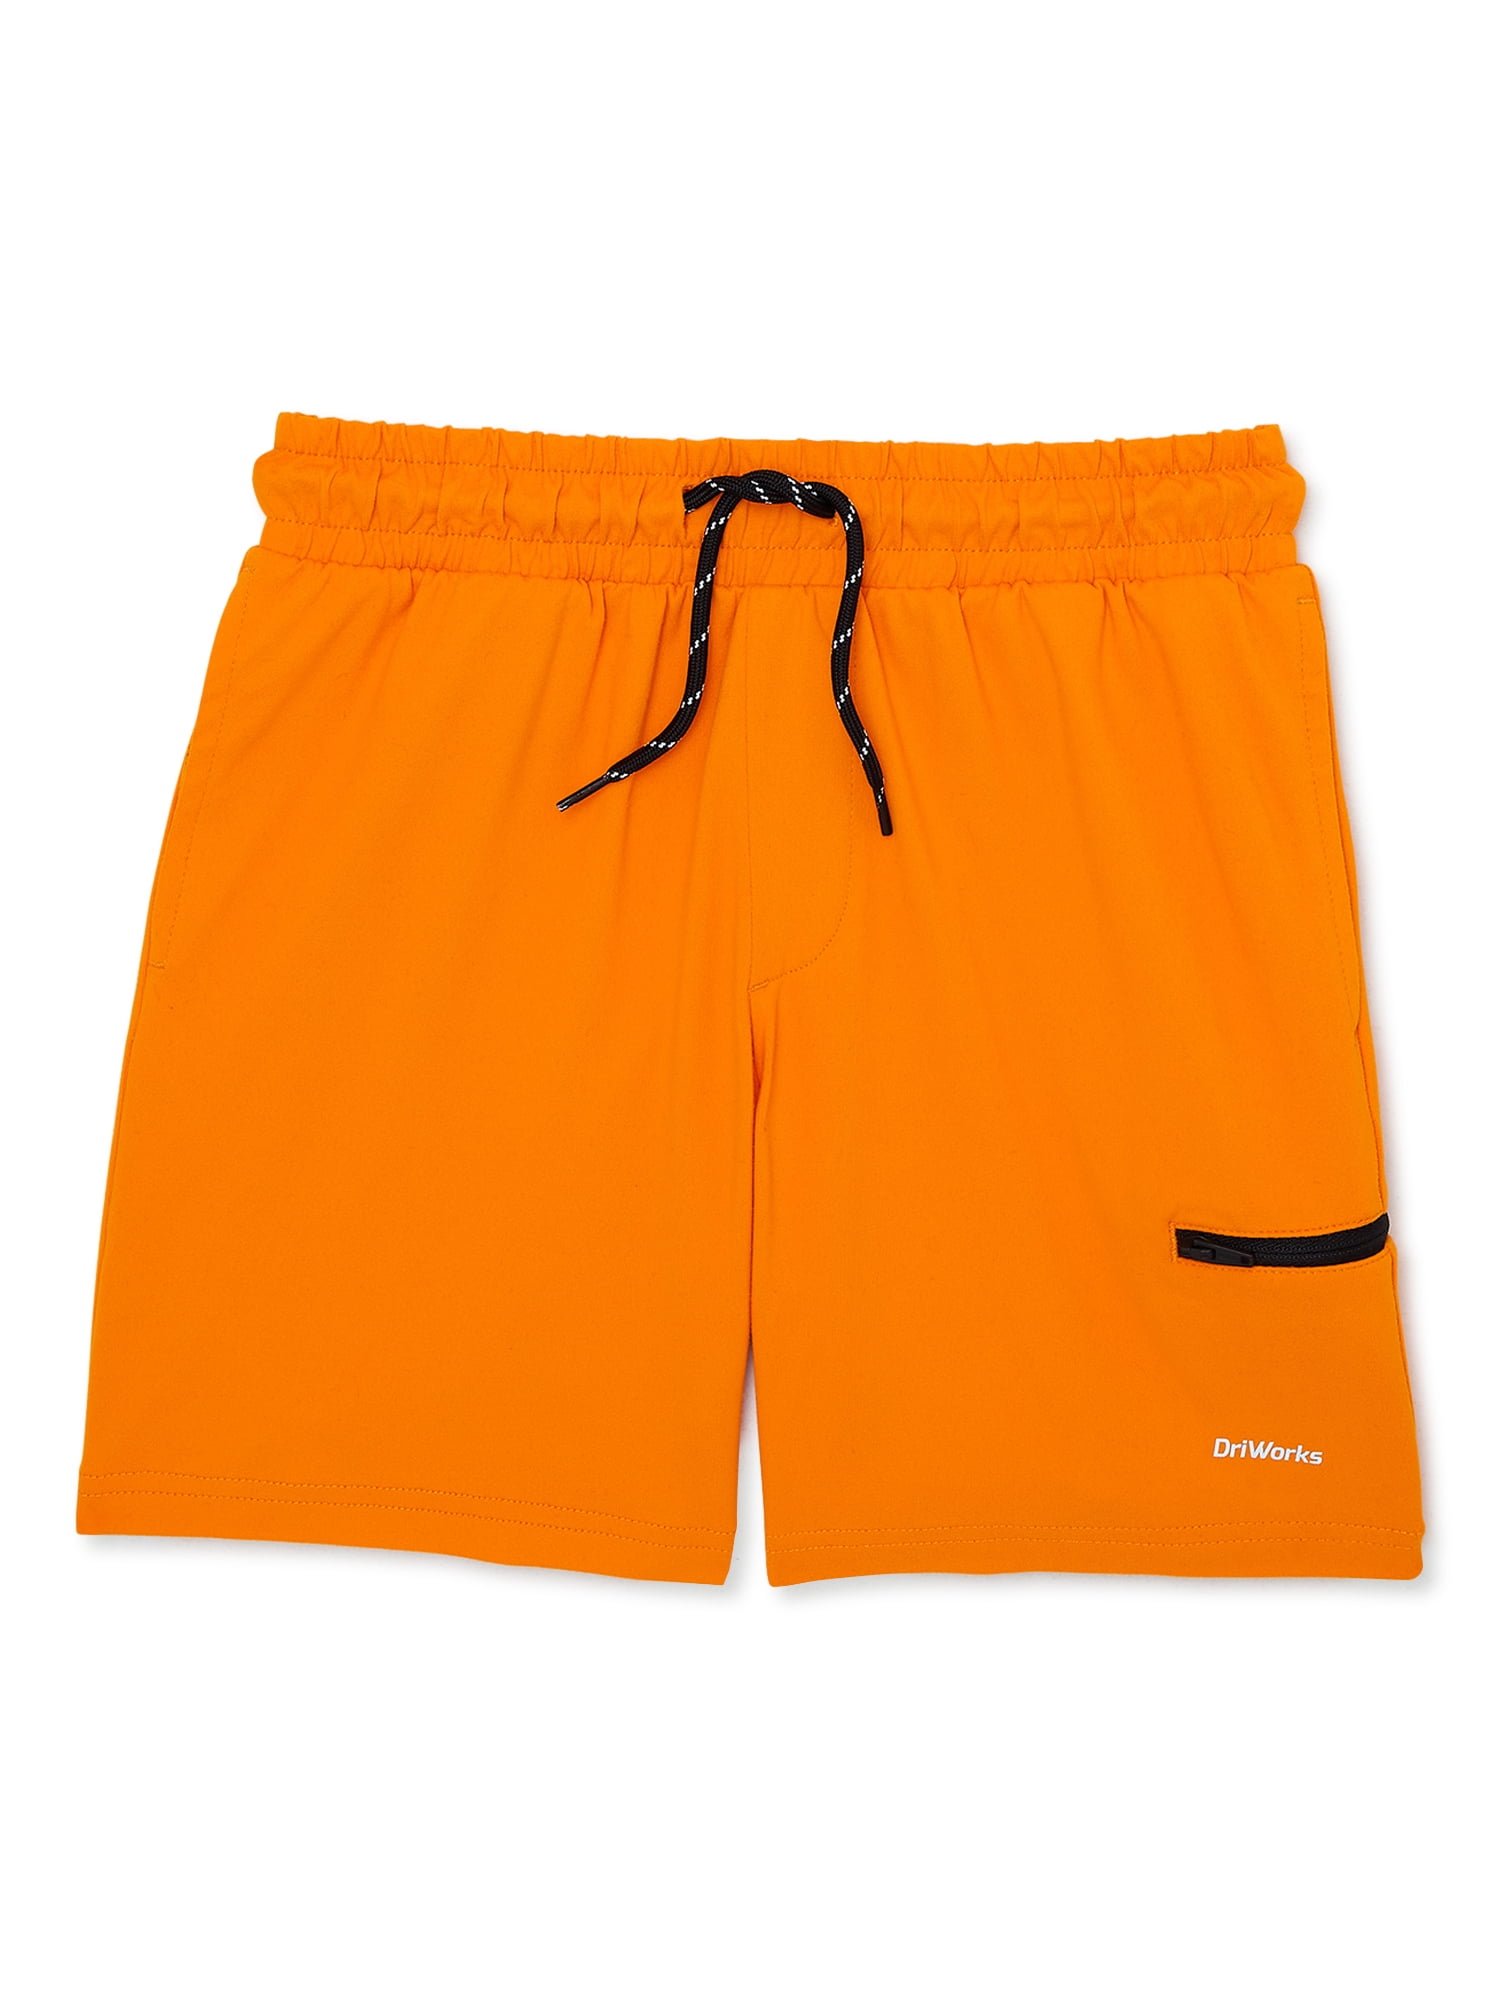 Athletic Works Boys Active Shorts, Sizes 4-18 & Husky - Walmart.com